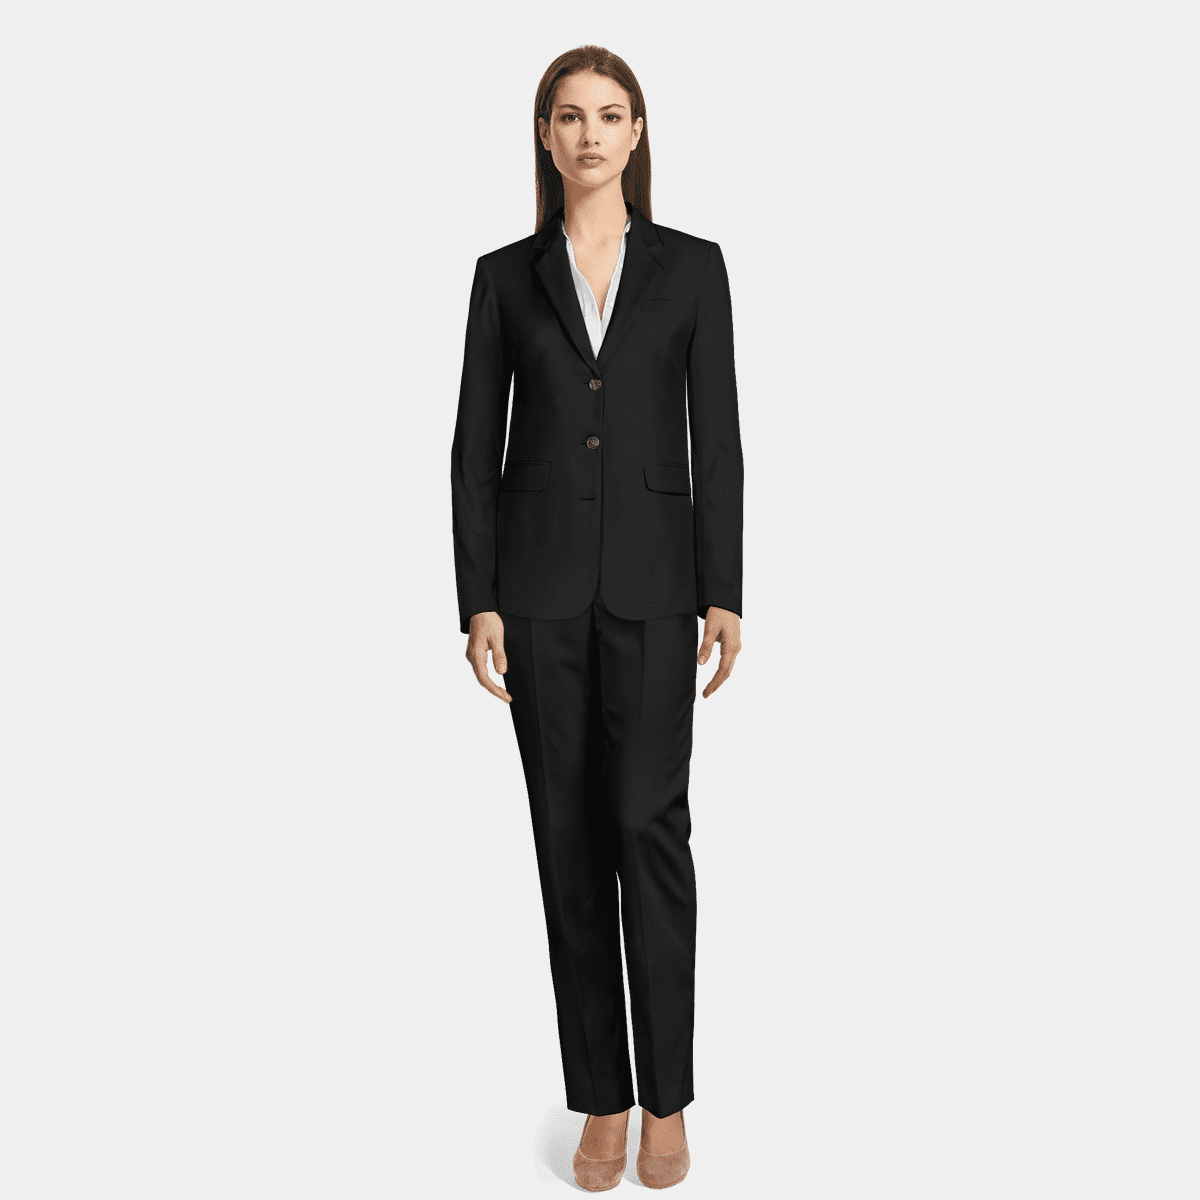 Fuchsia 3 button stretch Woman Suit with peak lapels